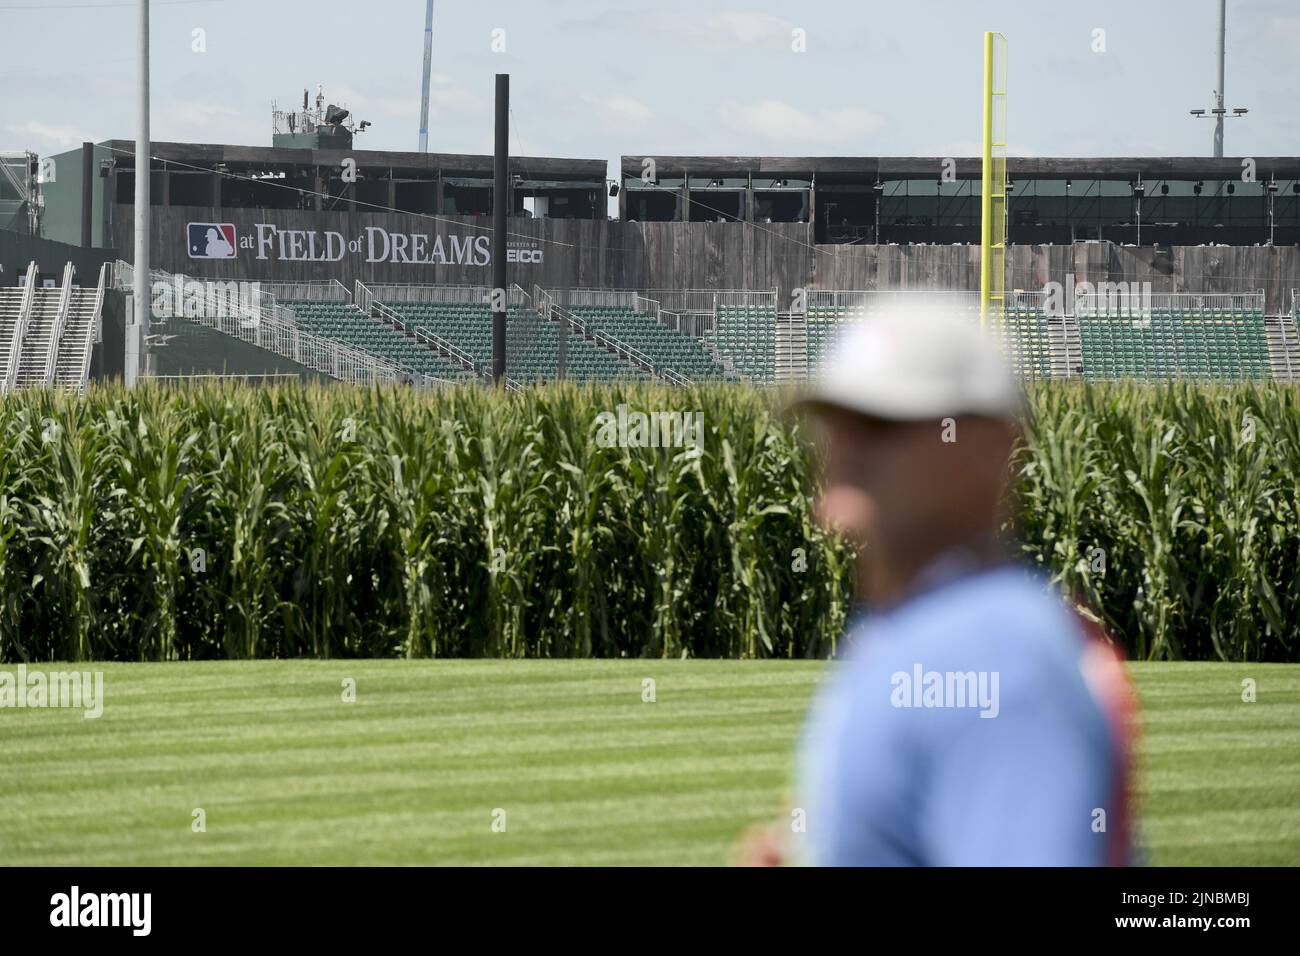 MLB at Field of Dreams: Photos of the Cincinnati Reds in Iowa